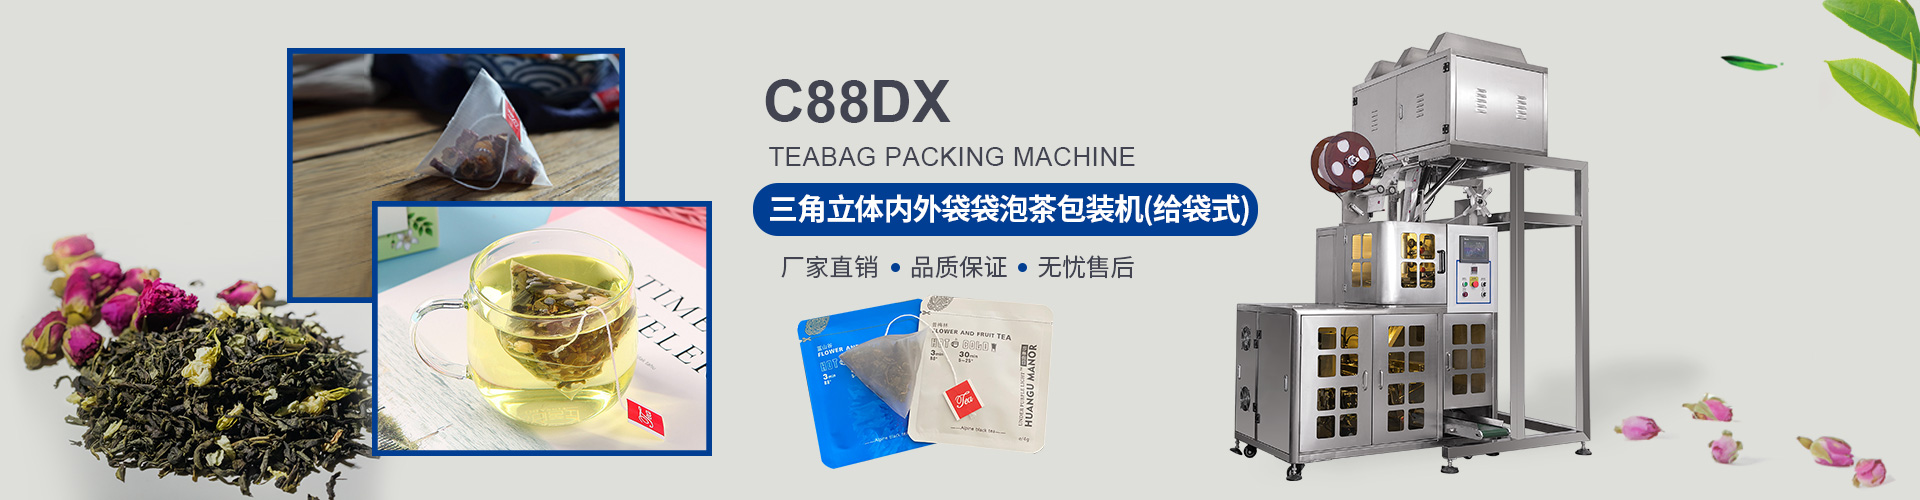 C88DX 三角尼龙网袋泡茶包装机